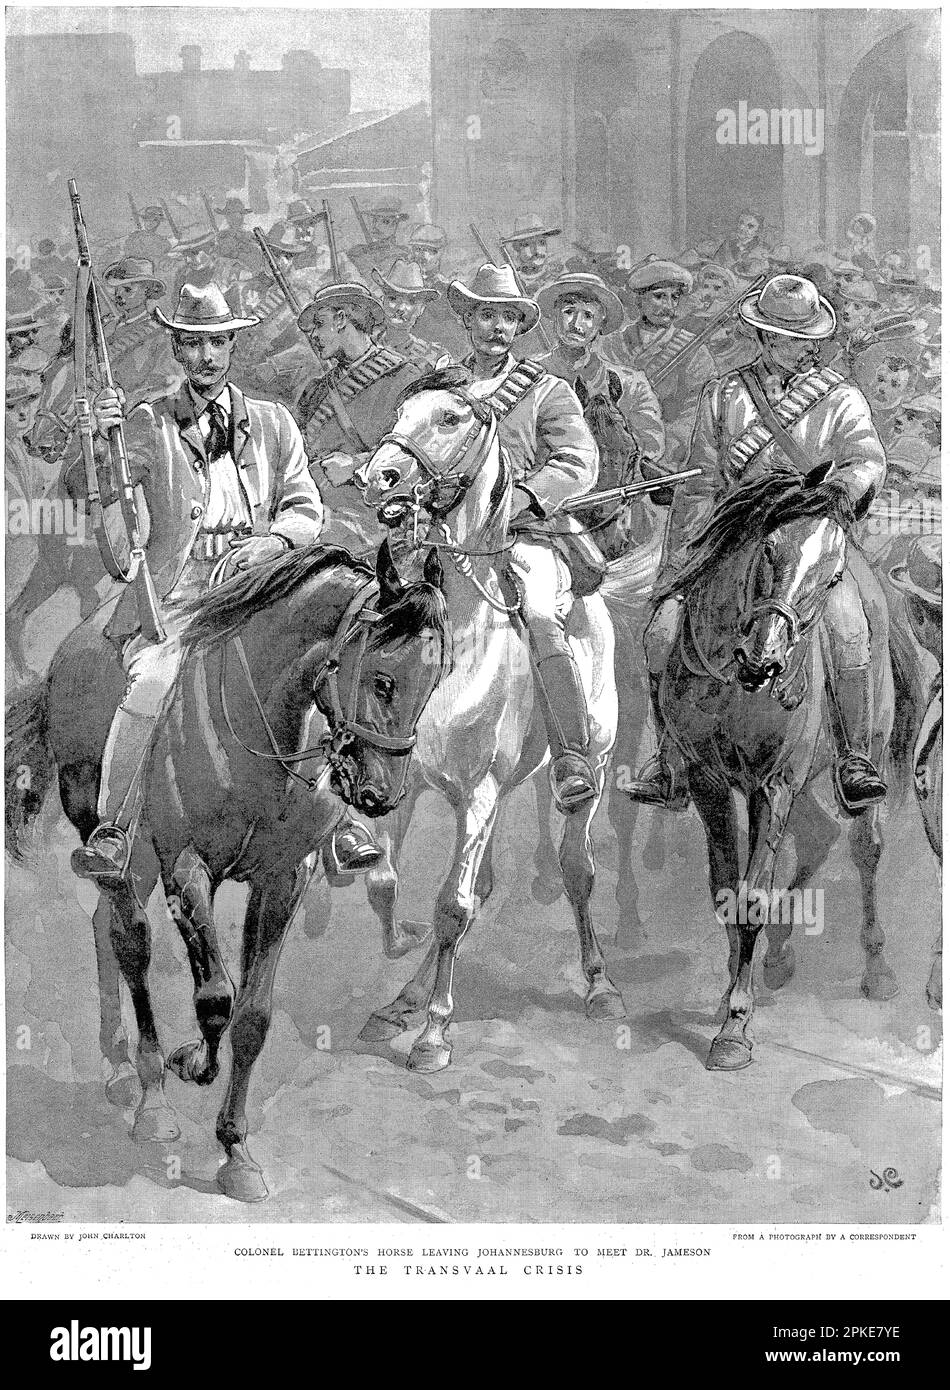 Colonel Bettingtons Pferd verlässt Johannesburg, um Dr. Jameson, 1896, zu treffen Stockfoto